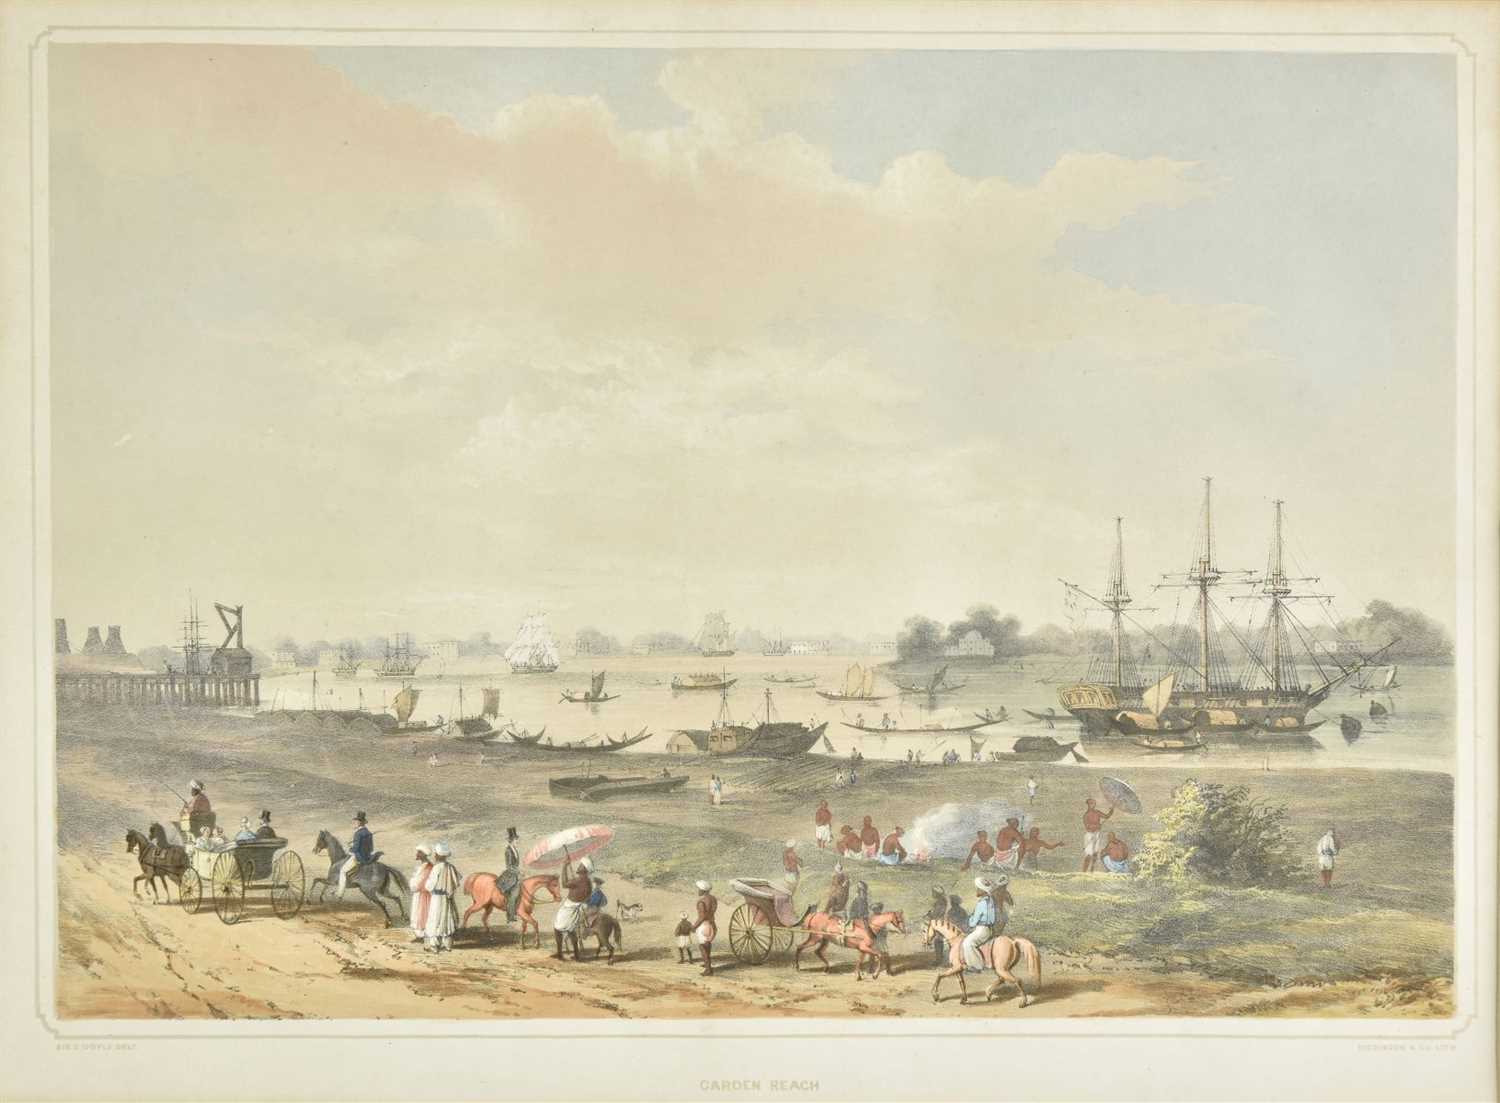 Lot 208 - Calcutta. D'Oyly (Sir Charles), Garden Reach, circa 1848